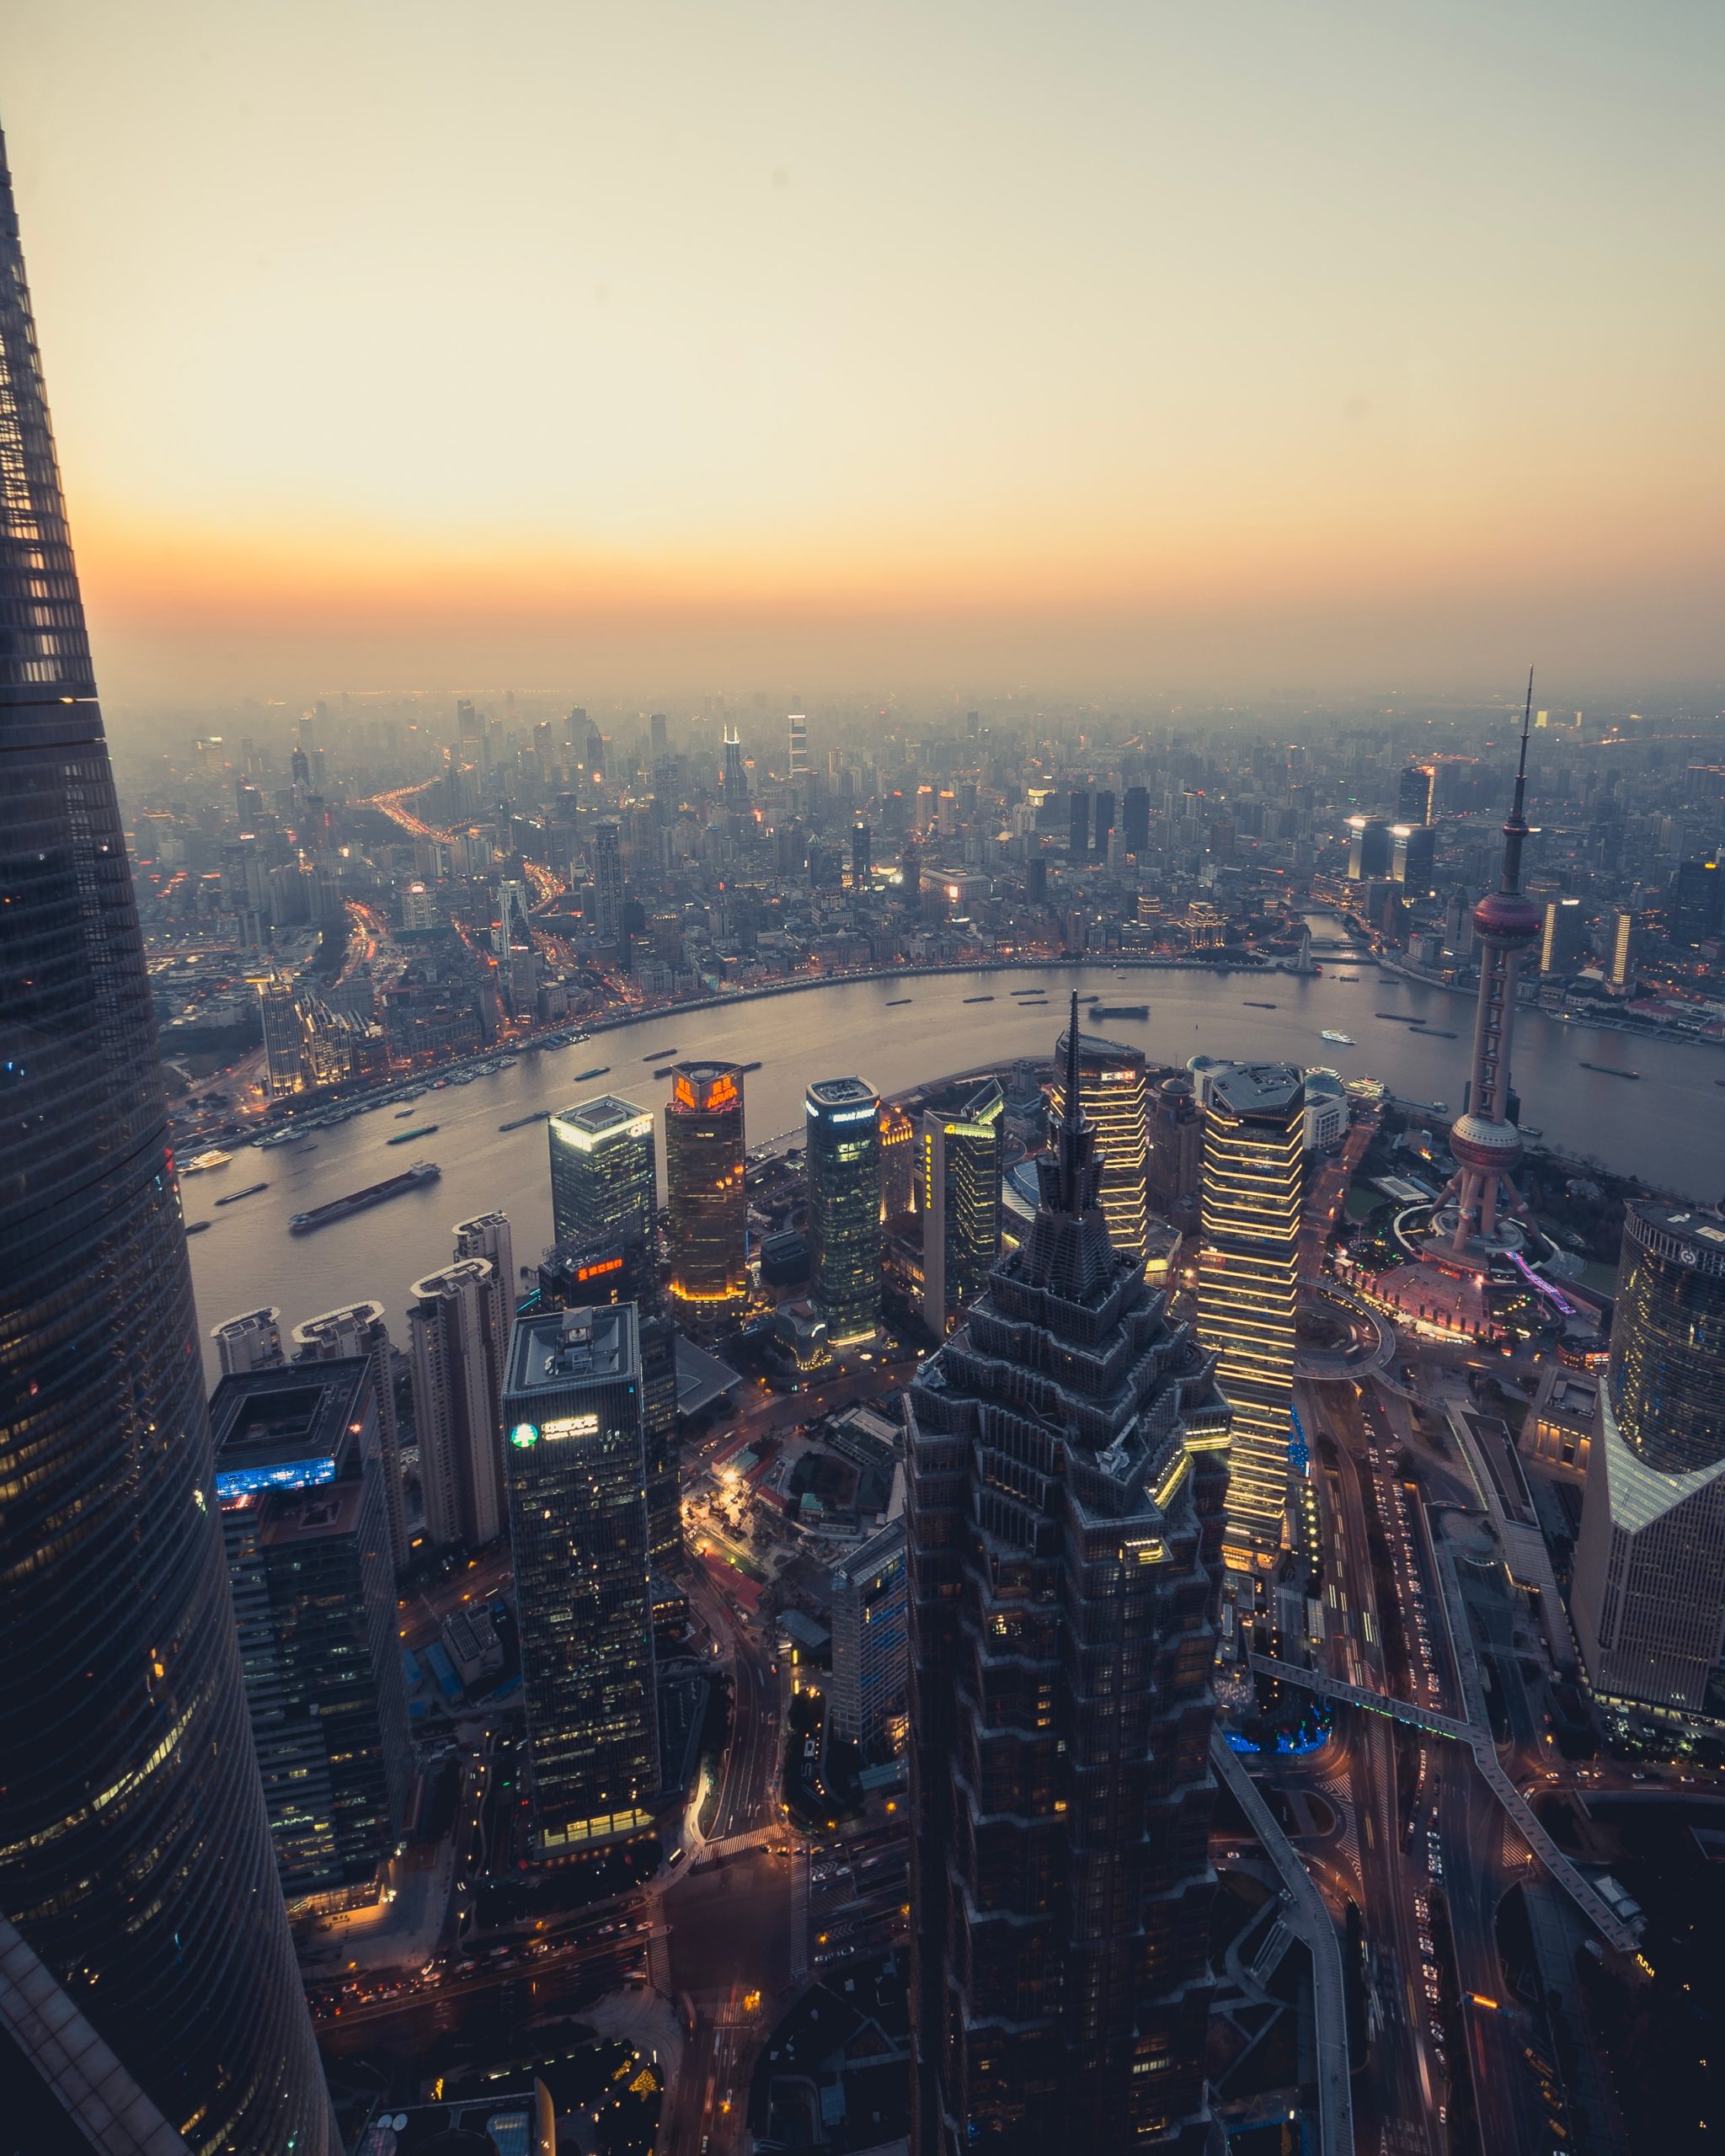 Skscrapers and city skyline of Shanghai.